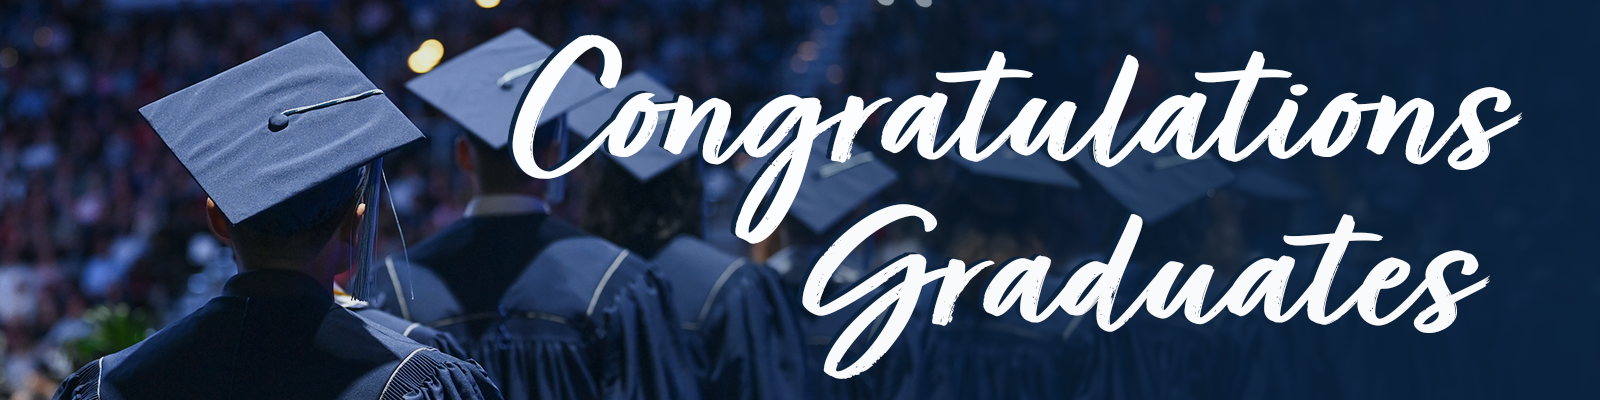 Congratulations Graduates with grads walking